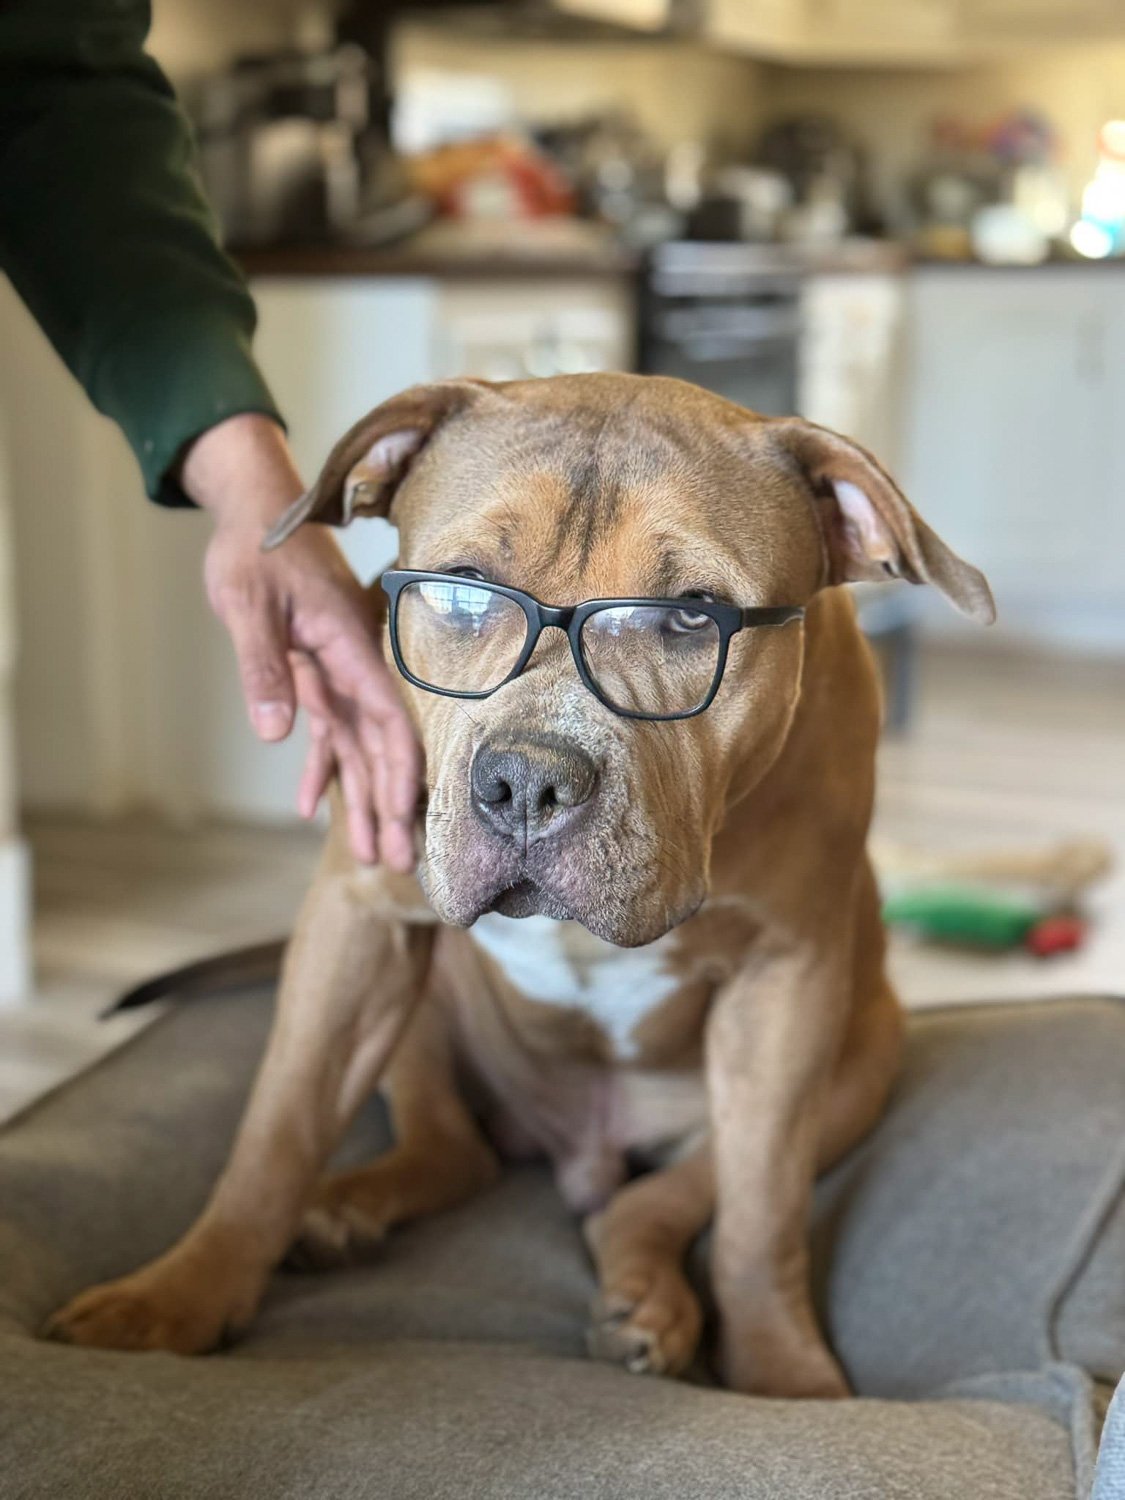 A reddish coloured dog staring at camera wearing reading glasses